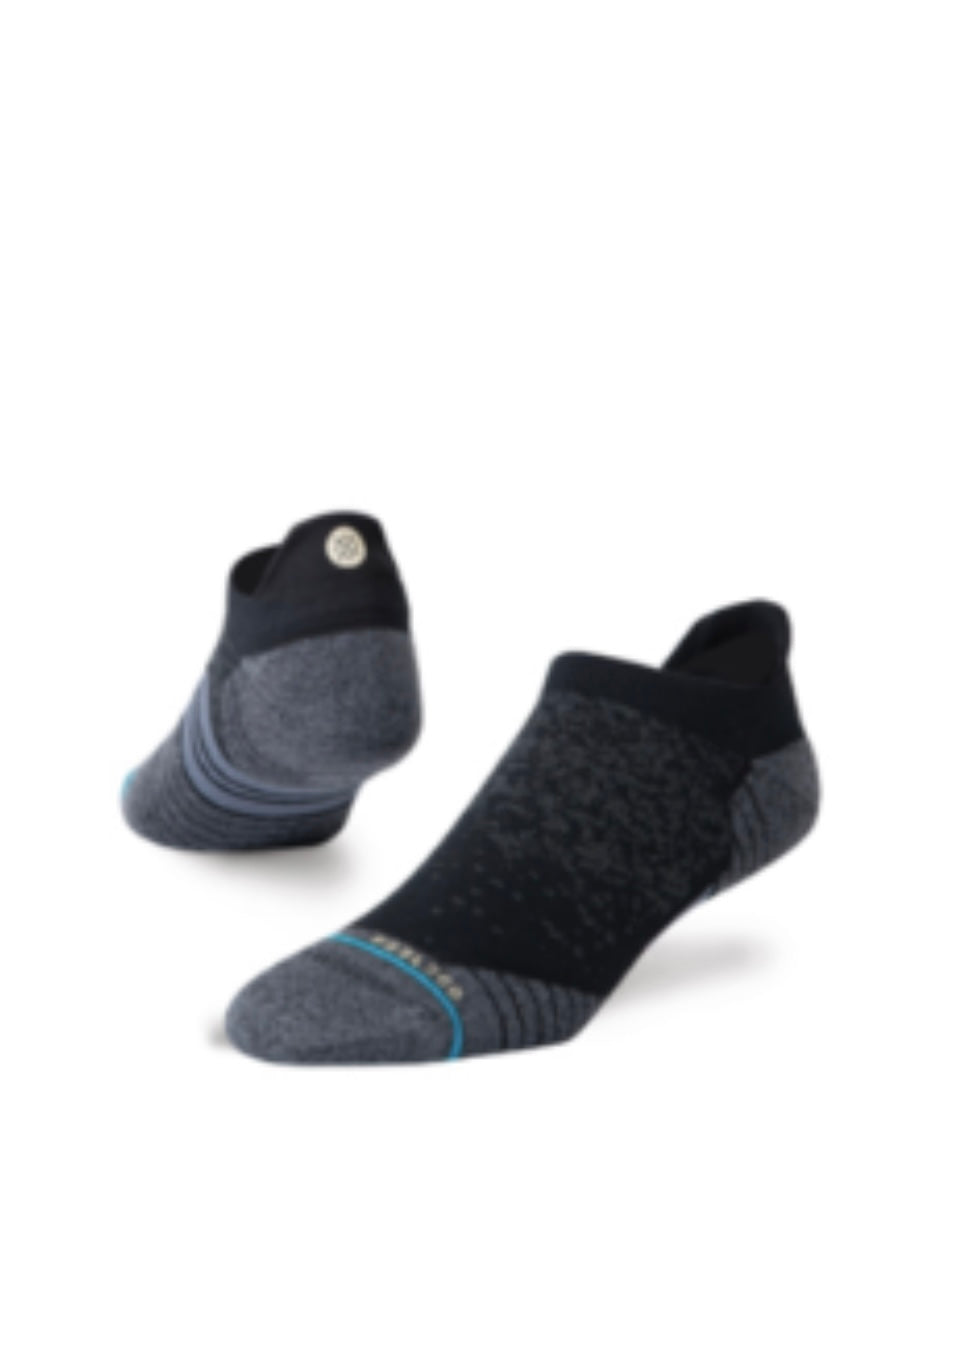 Regular Tab Socks - Black